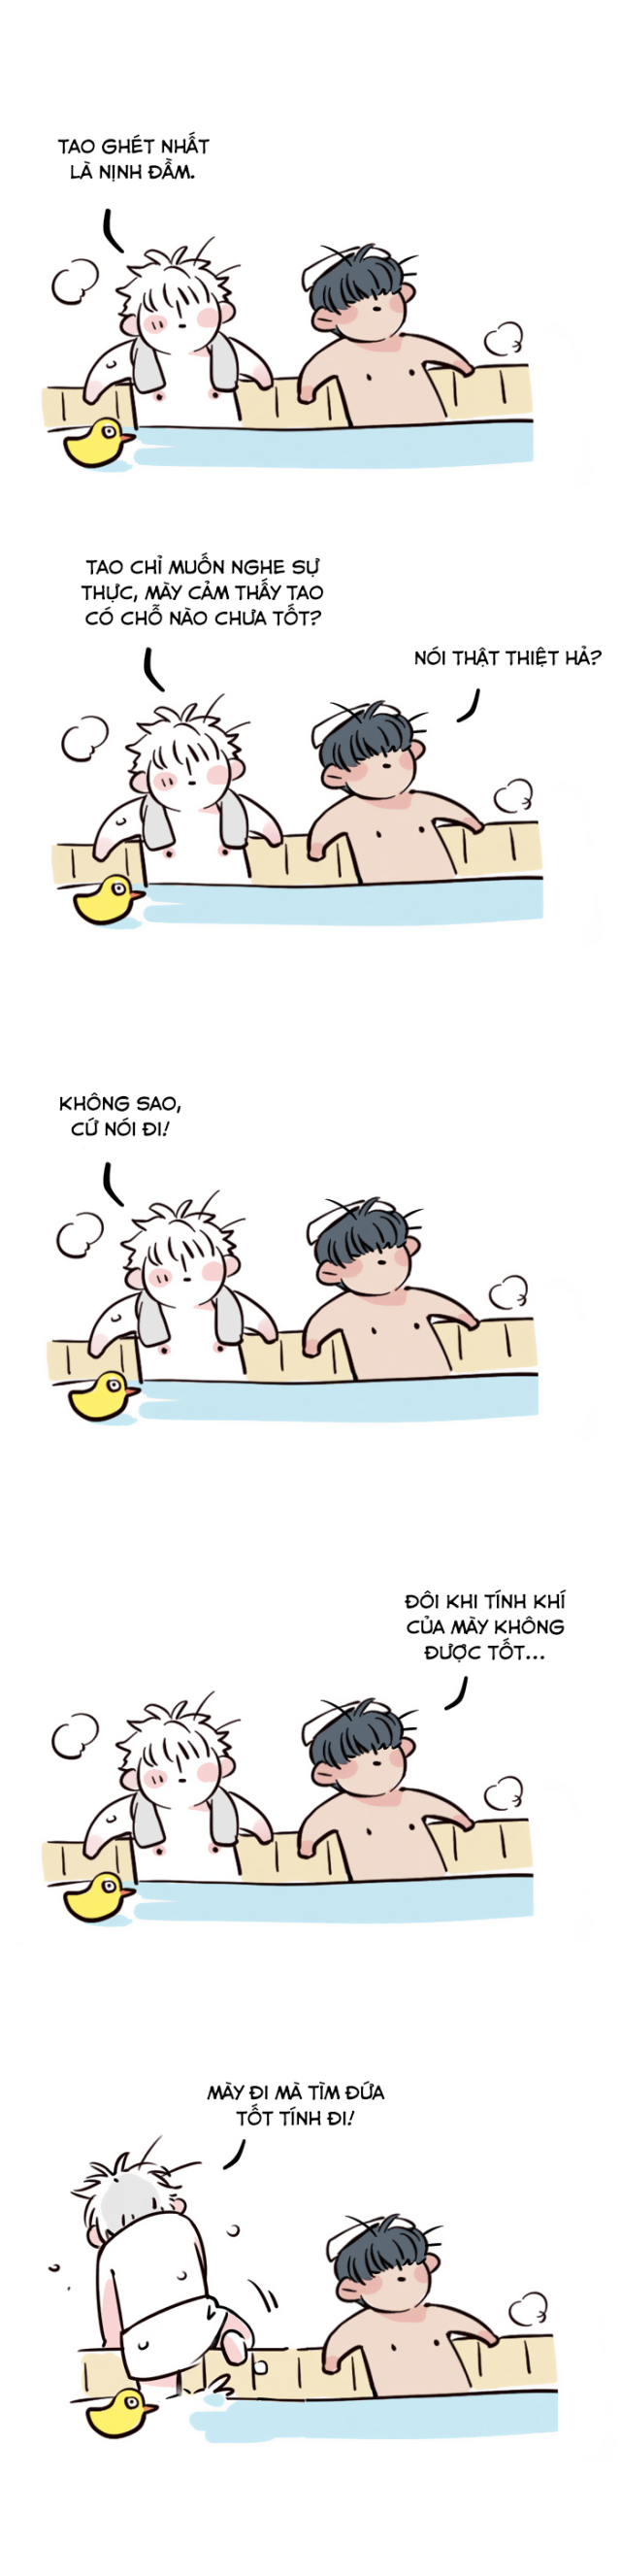 bath_6